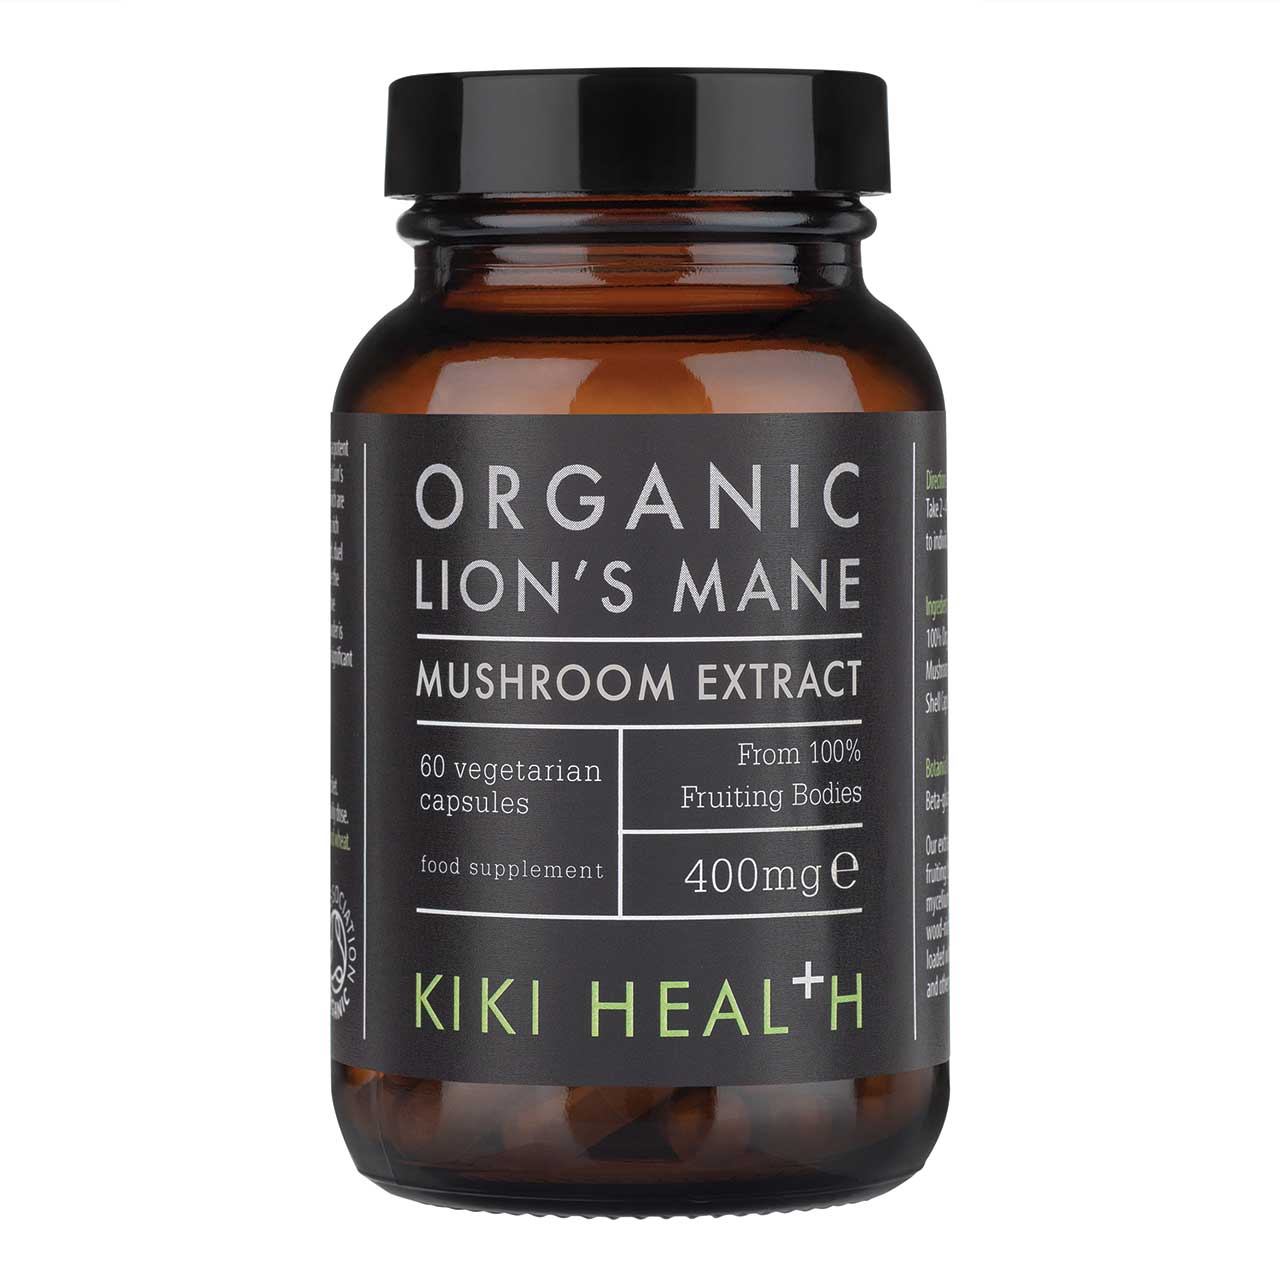 KIKI HEALTHOrganic Lion's Mane ExtractMushroom ExtractRED SUPPS